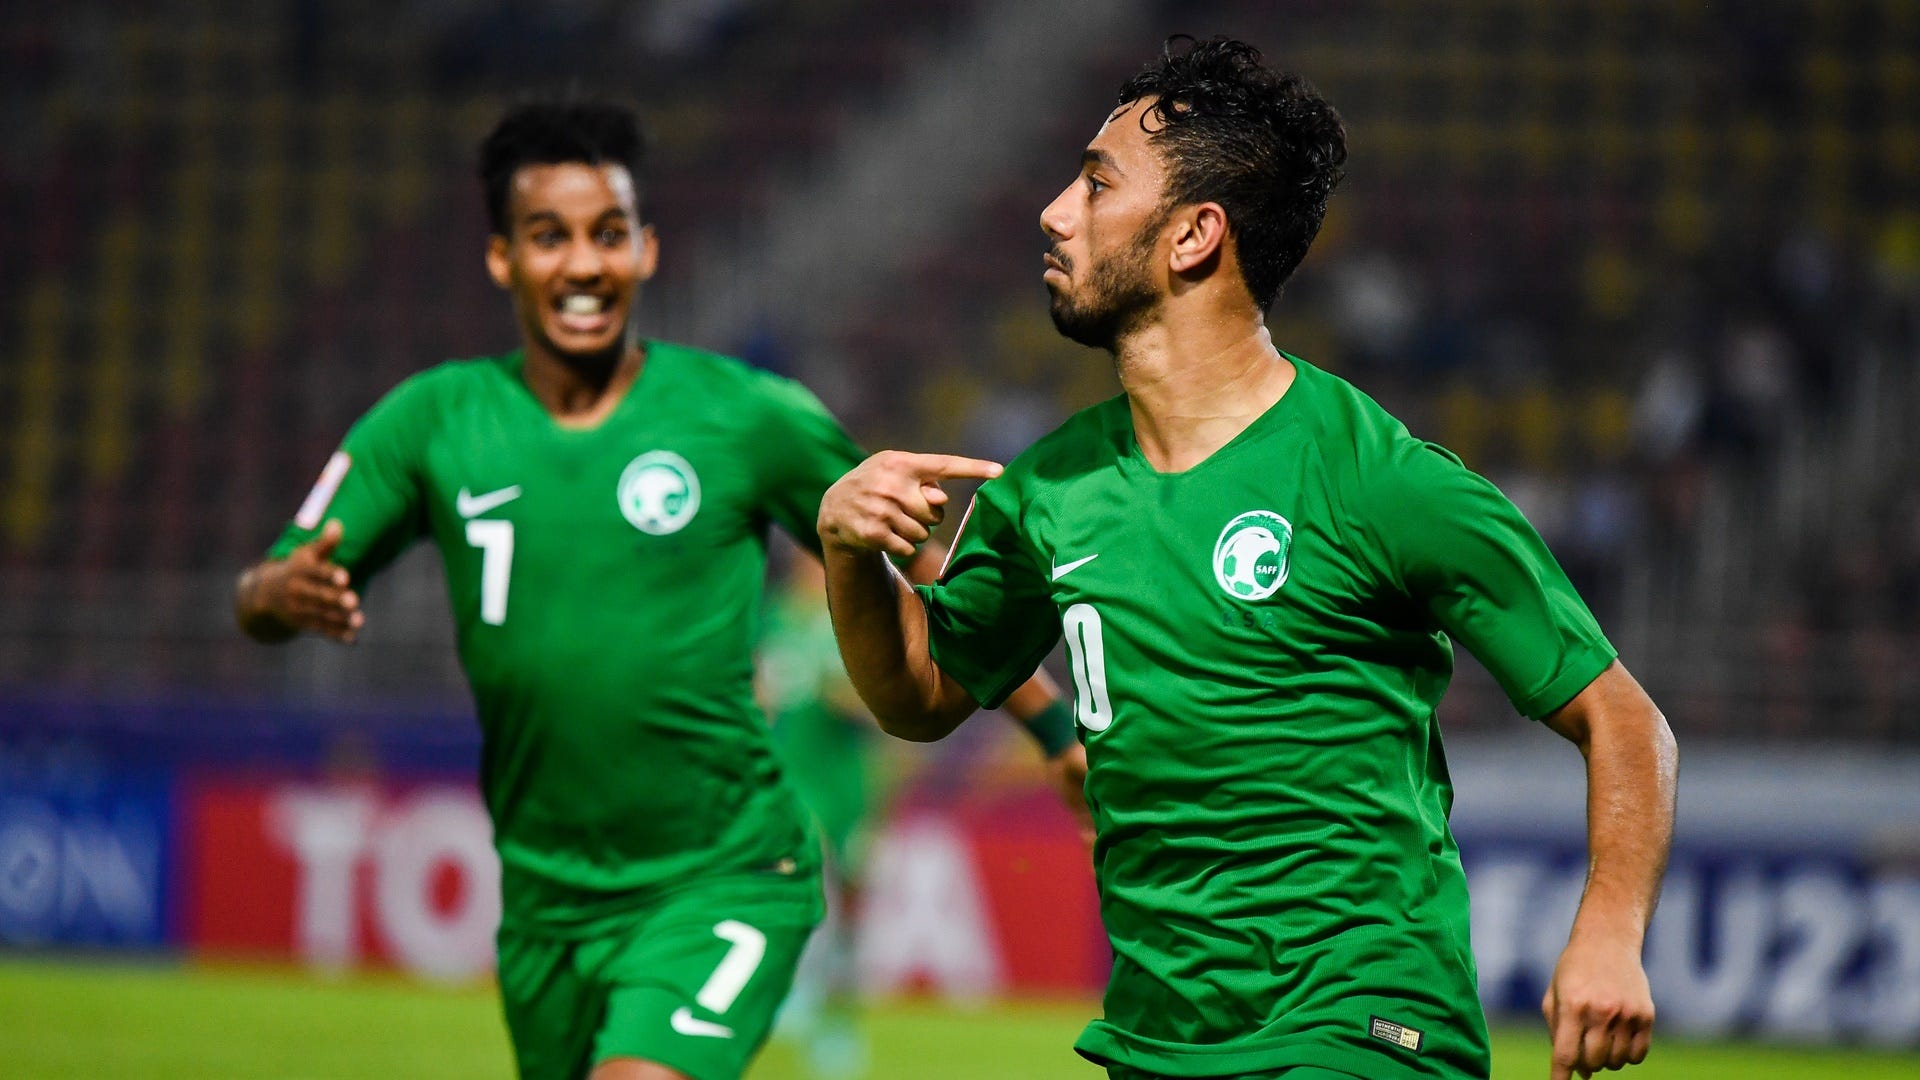 Ayman Al-Khulaif - Abdulrahman Ghareeb | U23 Japan vs U23 Saudi Arabia | AFC U23 Championship 2020 | Group Stage